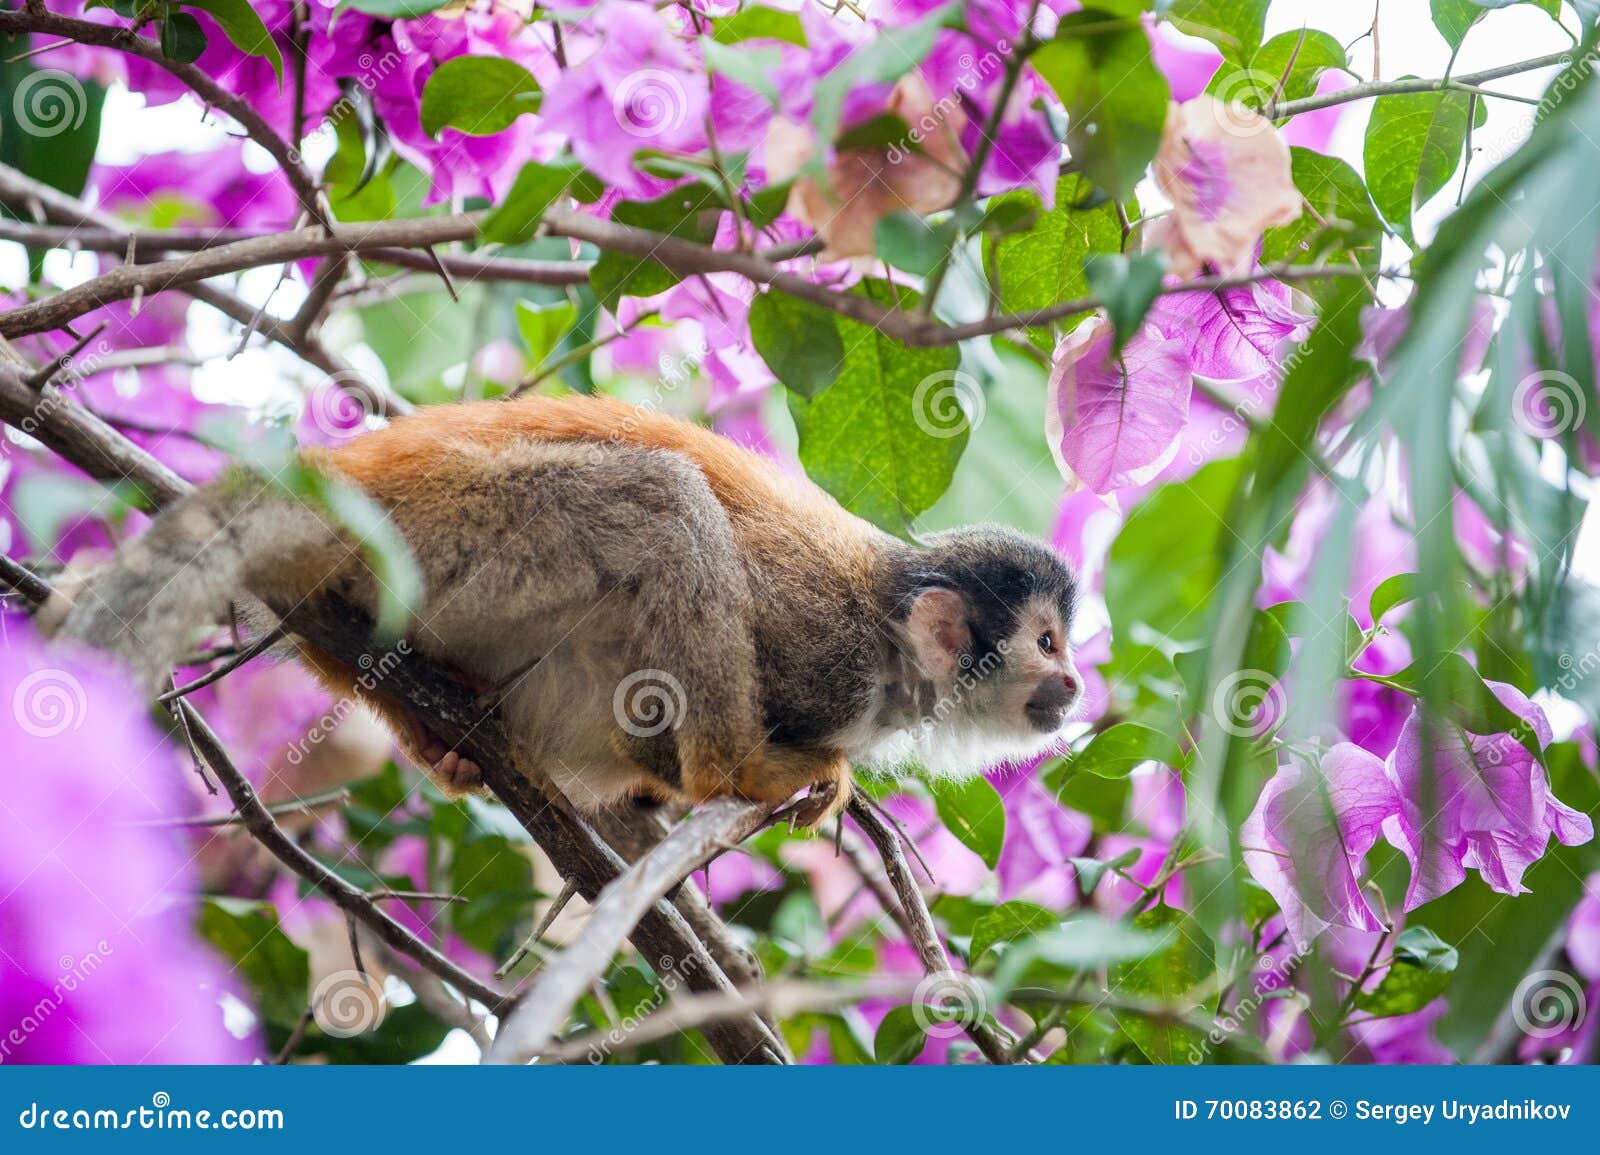 the squirrel monkey and pink flowers.the common squirrel monkey (saimiri sciureus)